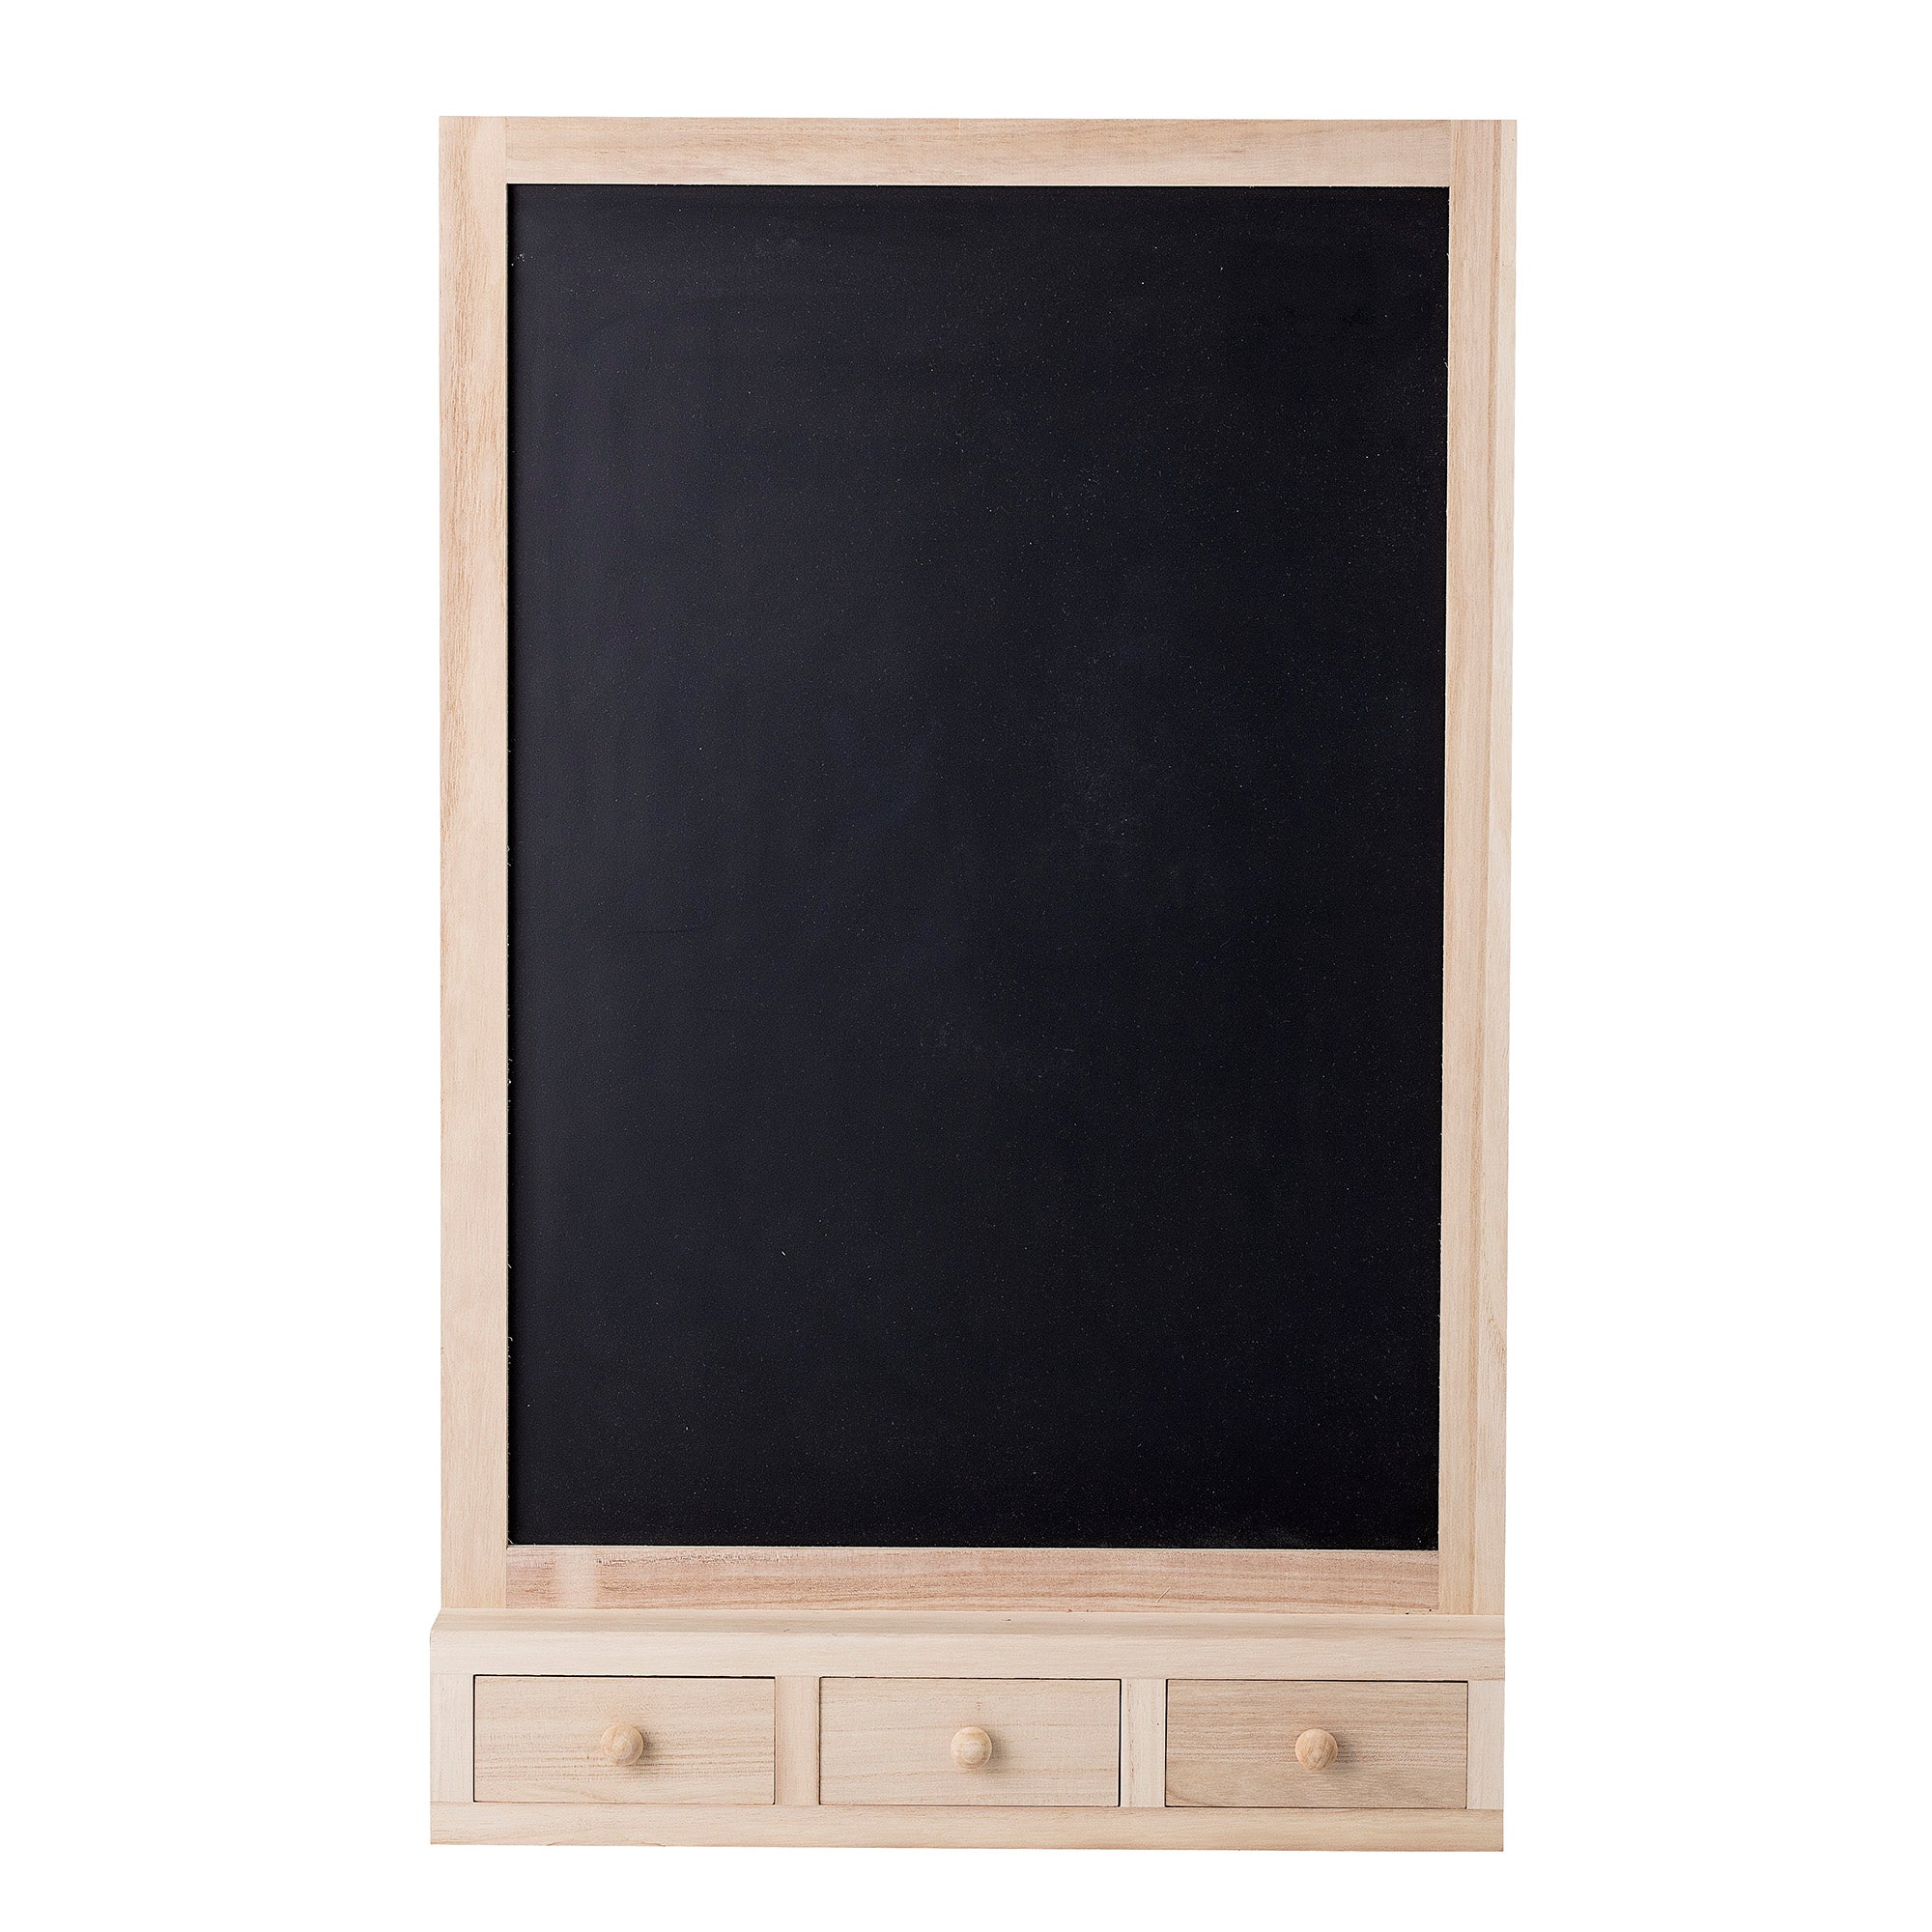 Blackboard with drawers